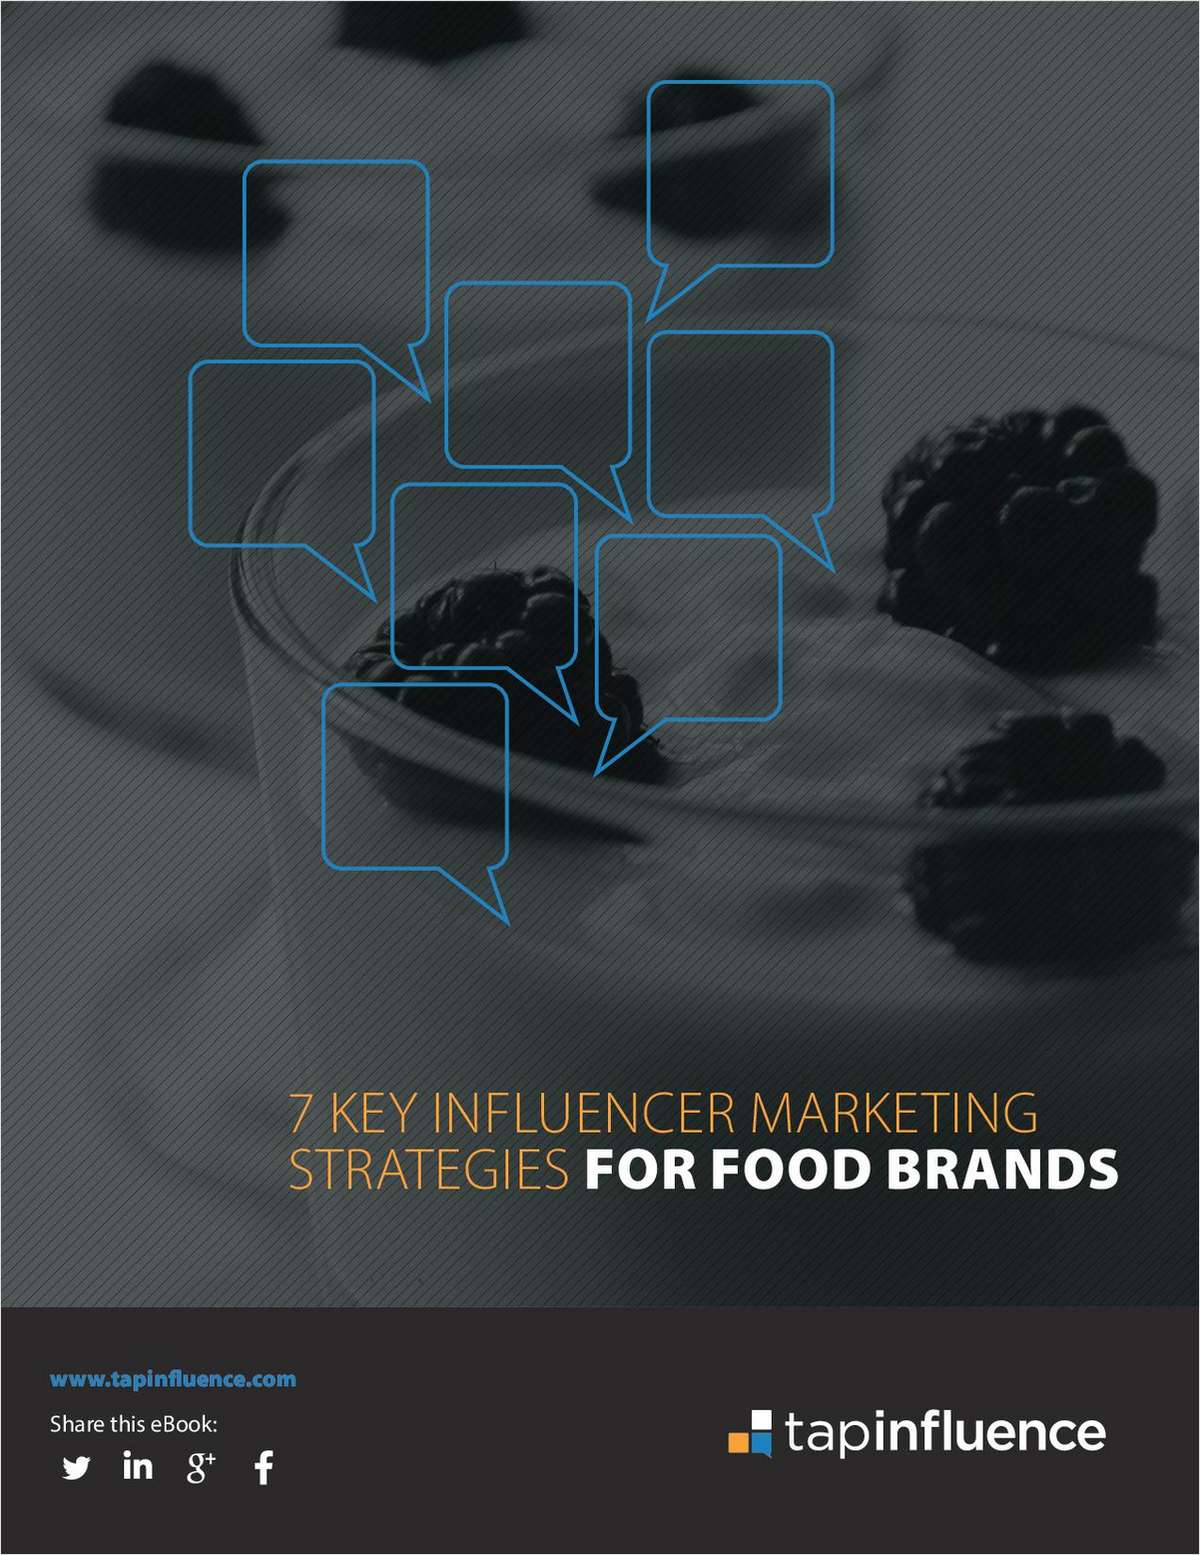 7 Key Influencer Marketing Strategies for Food Brands